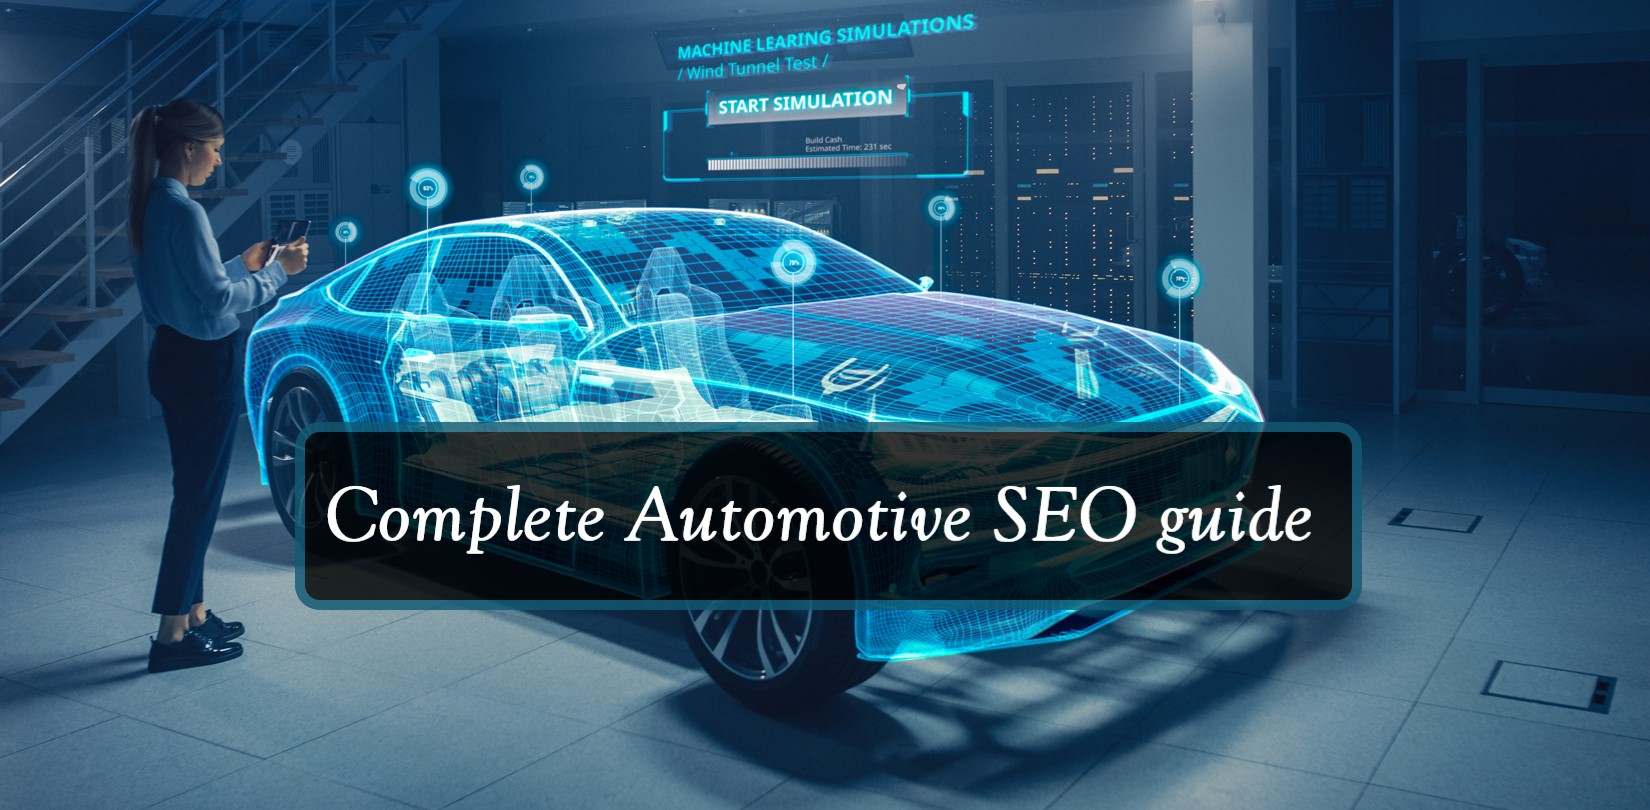 A Complete Automotive SEO guide